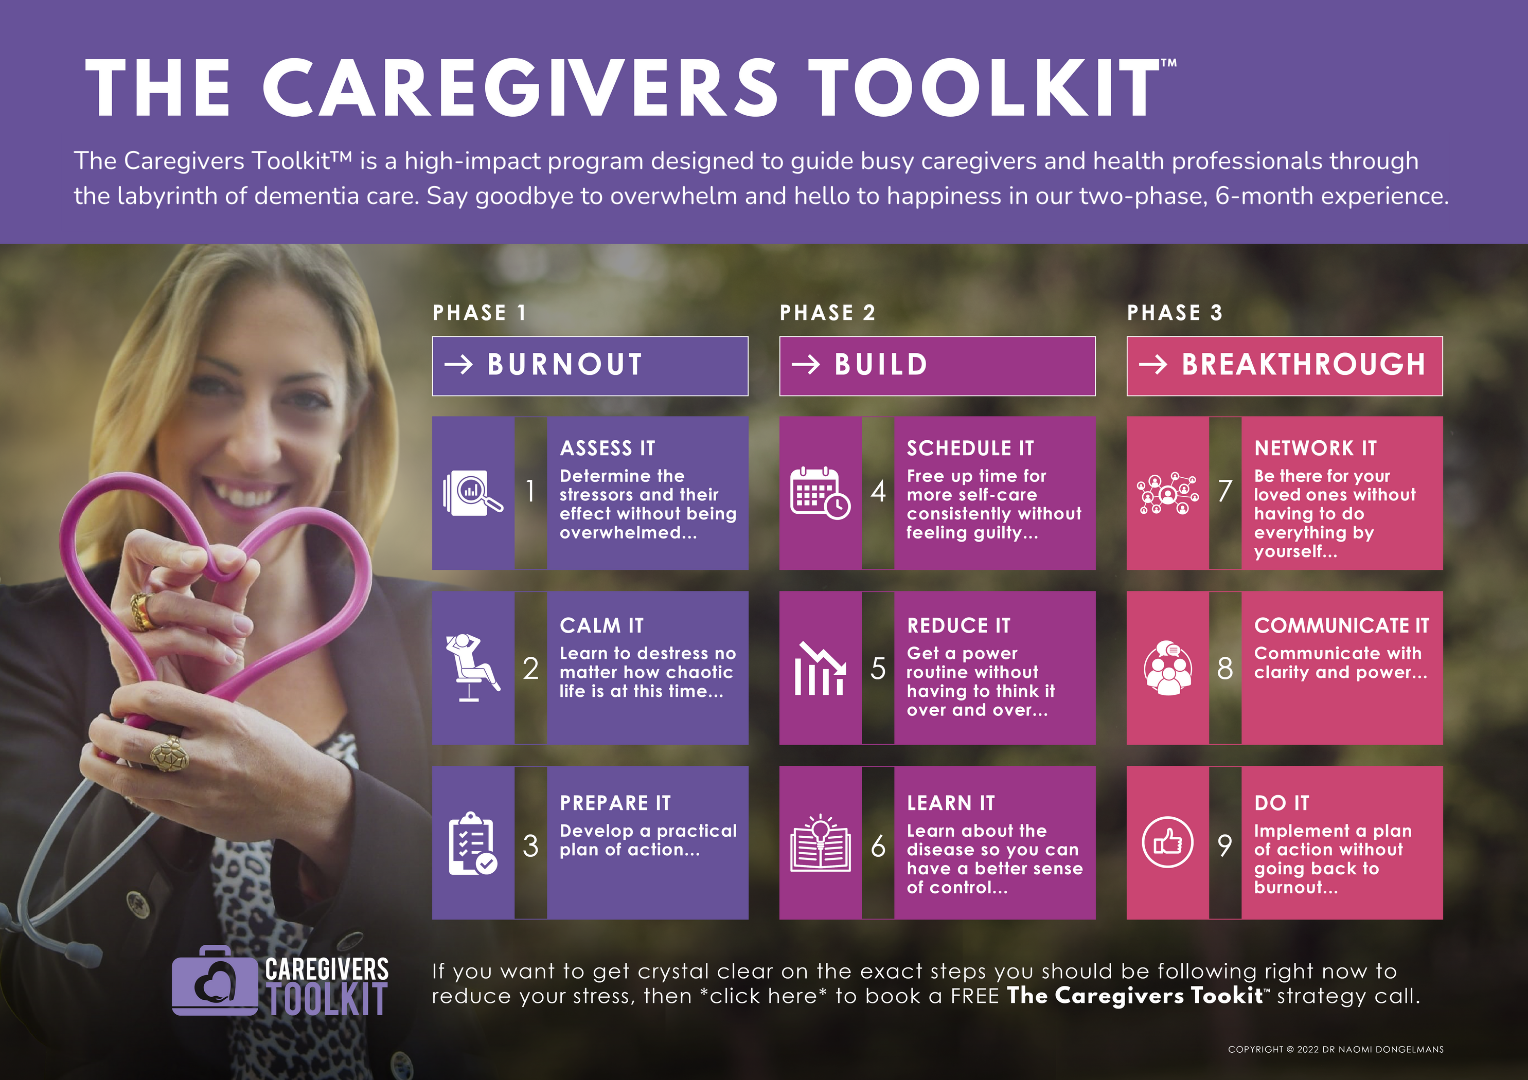 The Caregivers Toolkit™ roadmap